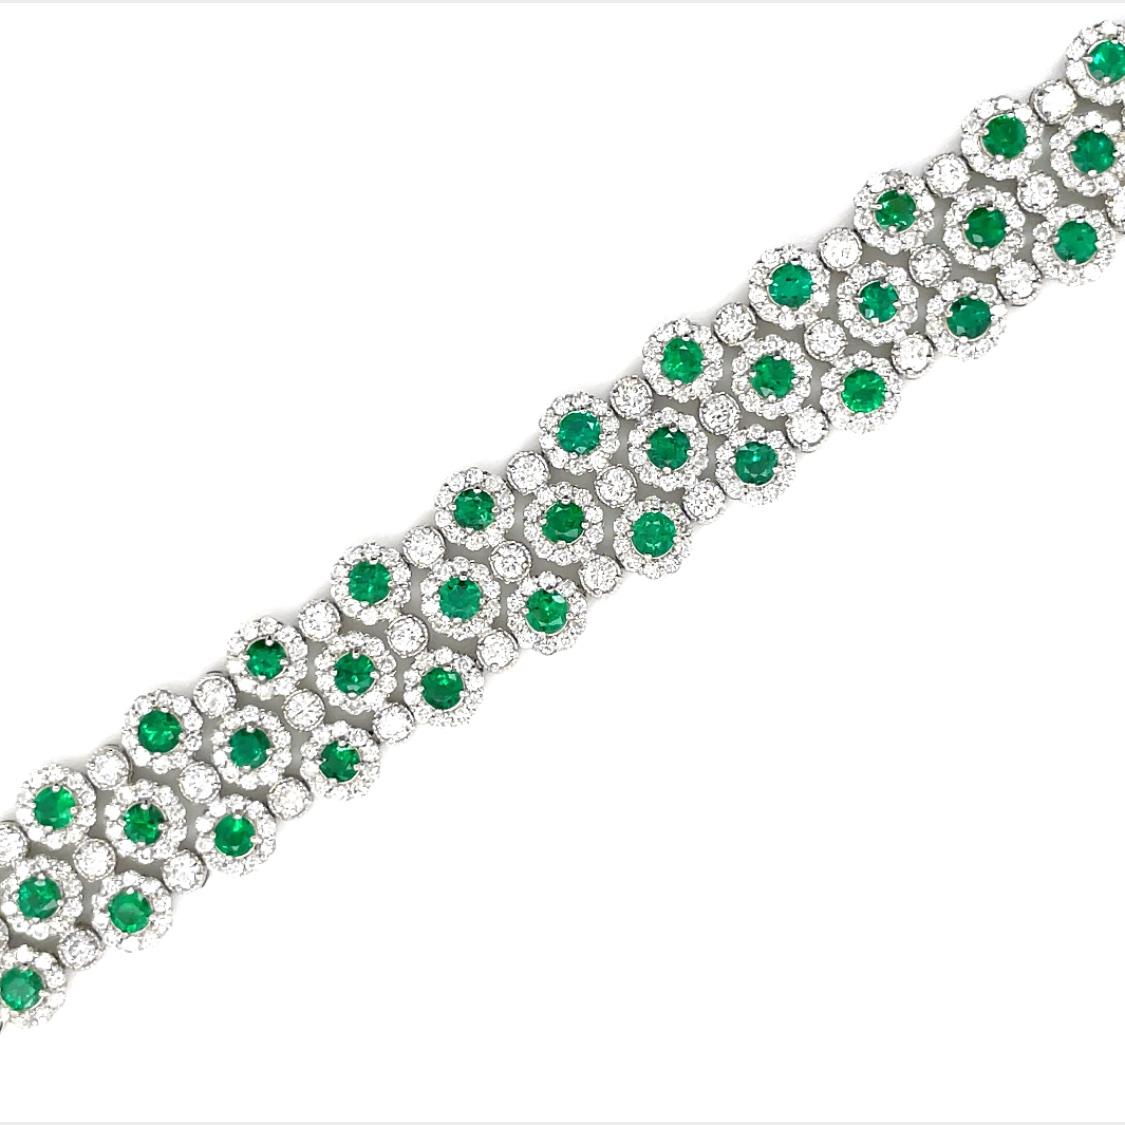 5.19 Carat Natural Round Cut Emeralds and Diamonds Bracelet Set in Platinum 1